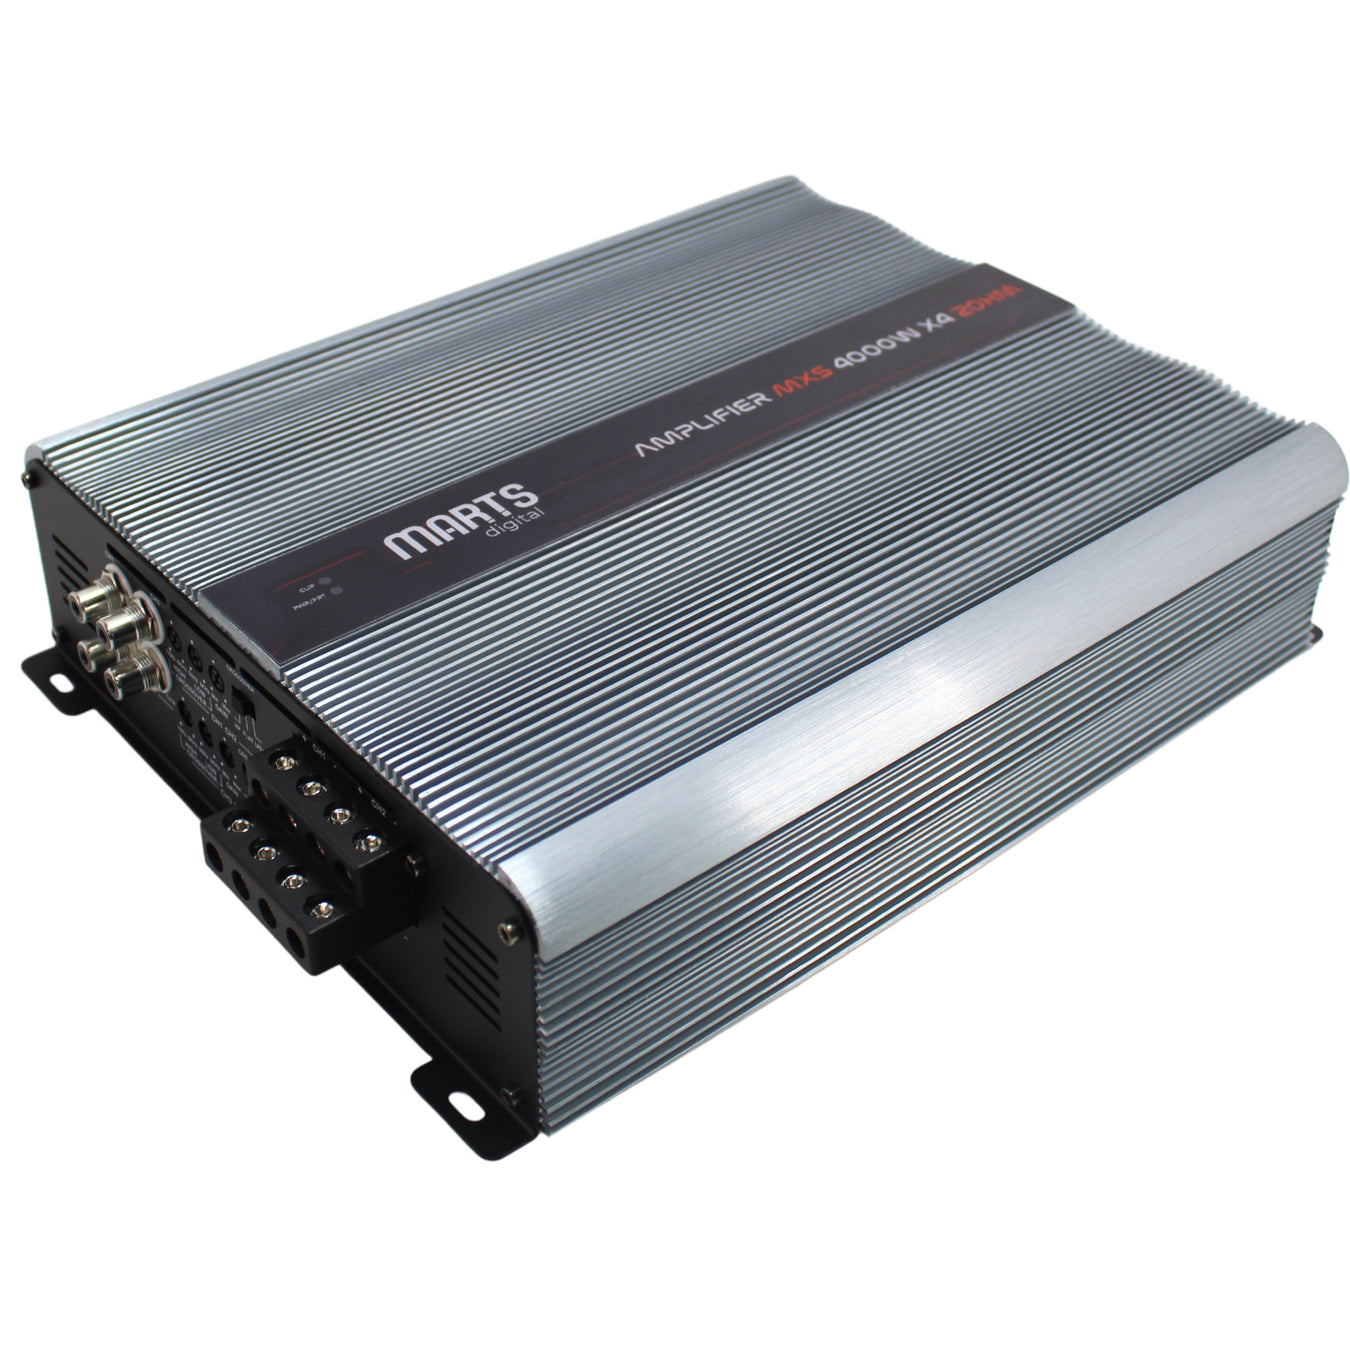 Marts Digital MXS Series Amplifiers